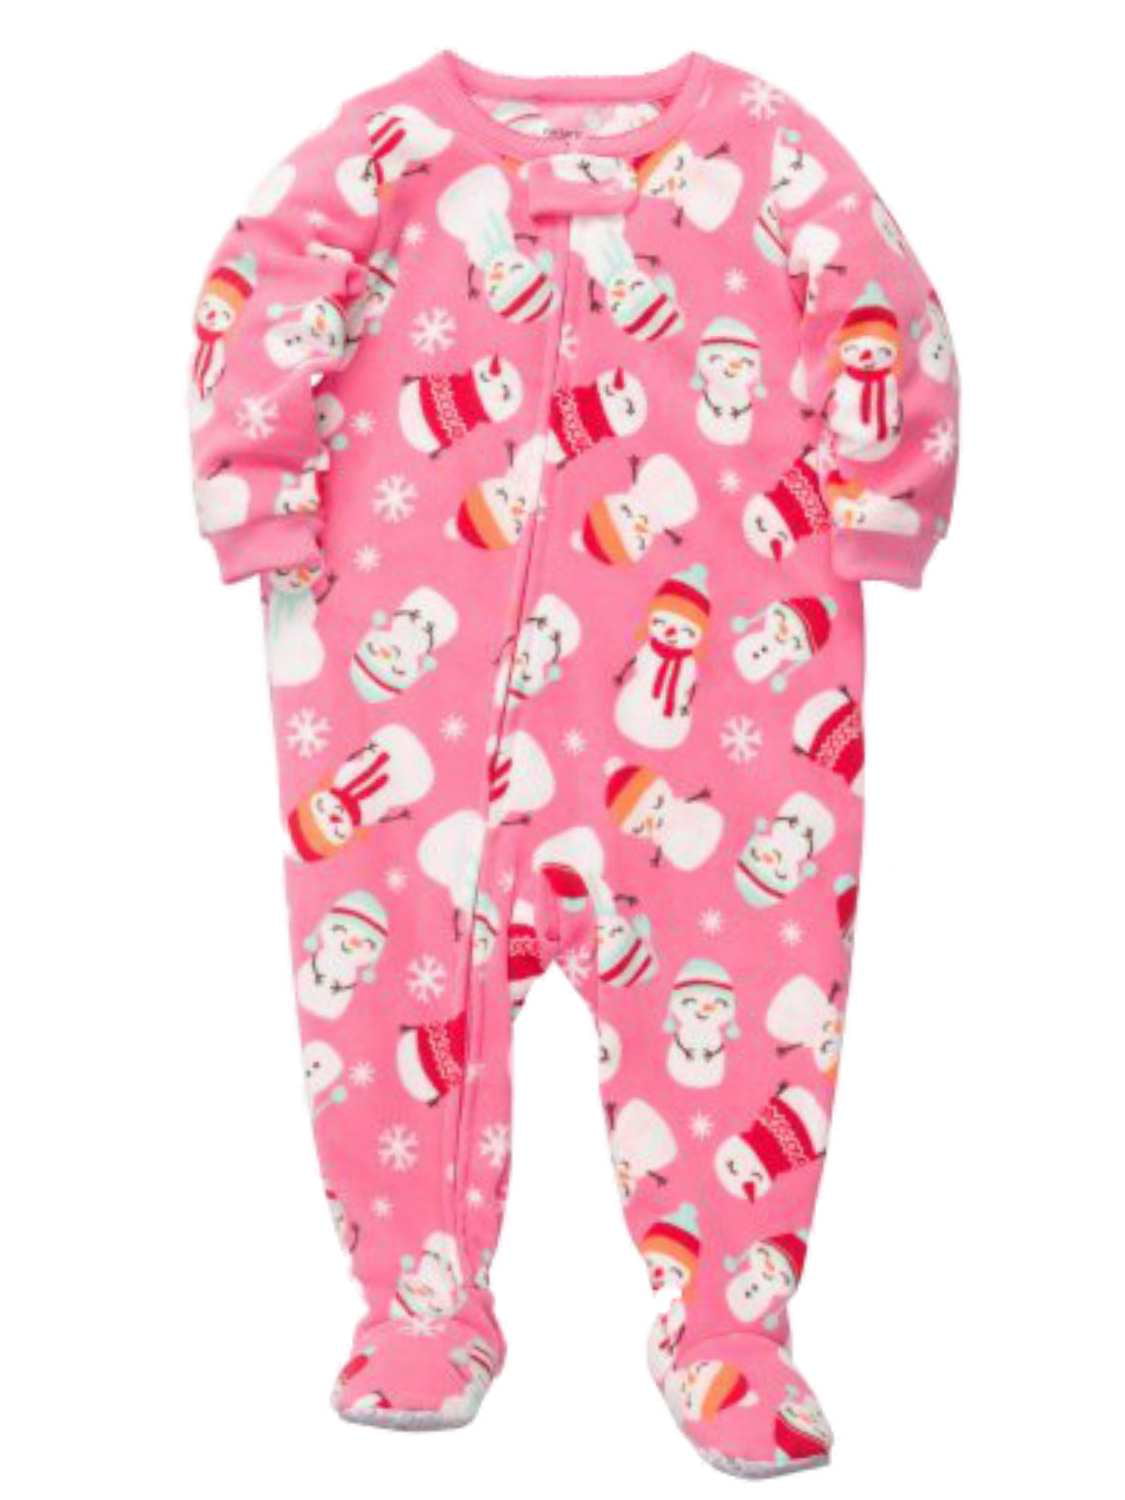 Carters Toddler Girls Purple Snowman Footed Microfleece Sleeper Pajamas 3t 